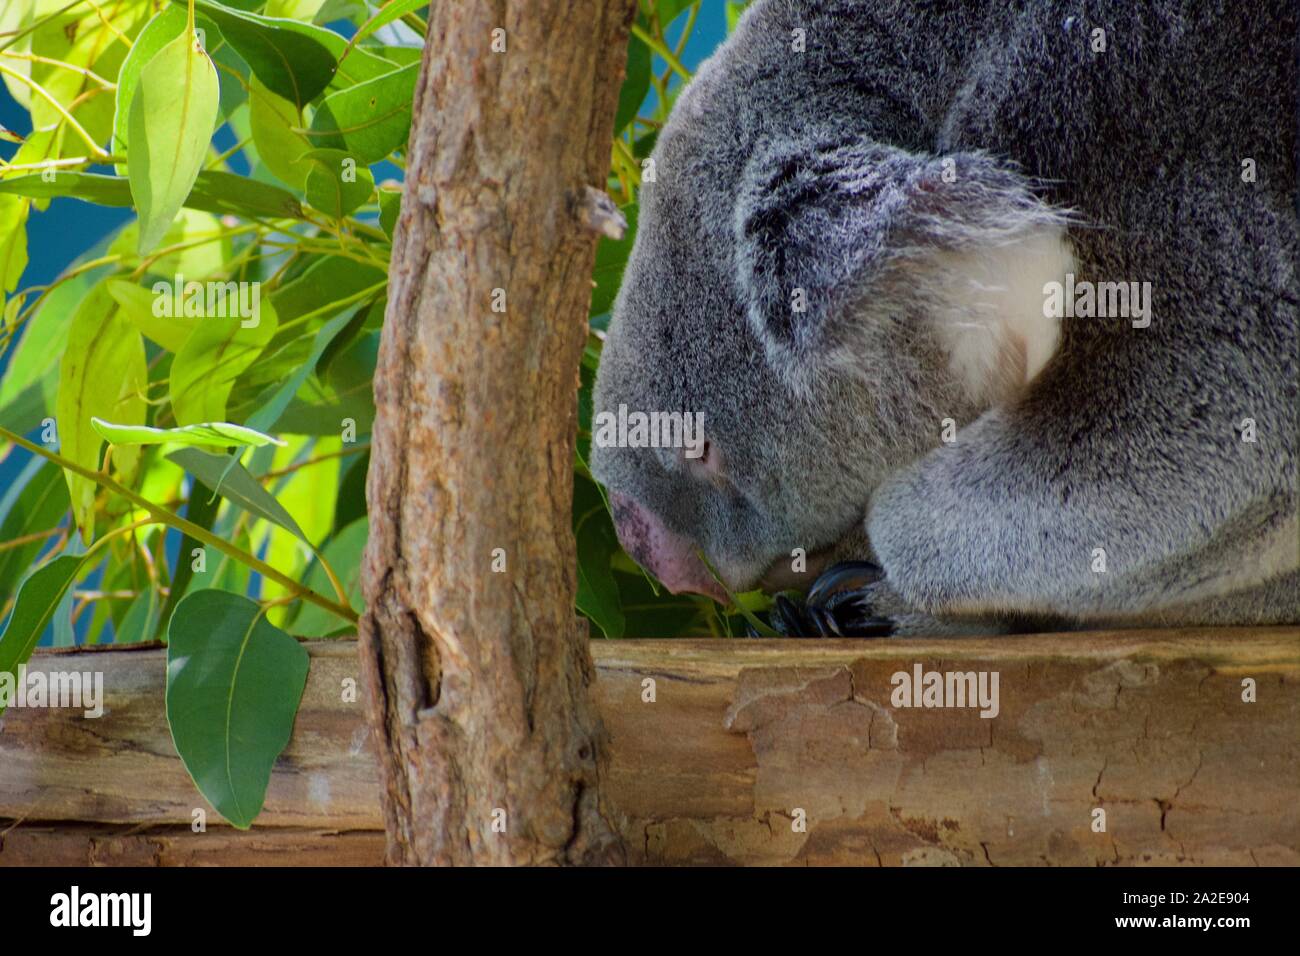 Queensland koala resting on perch Stock Photo